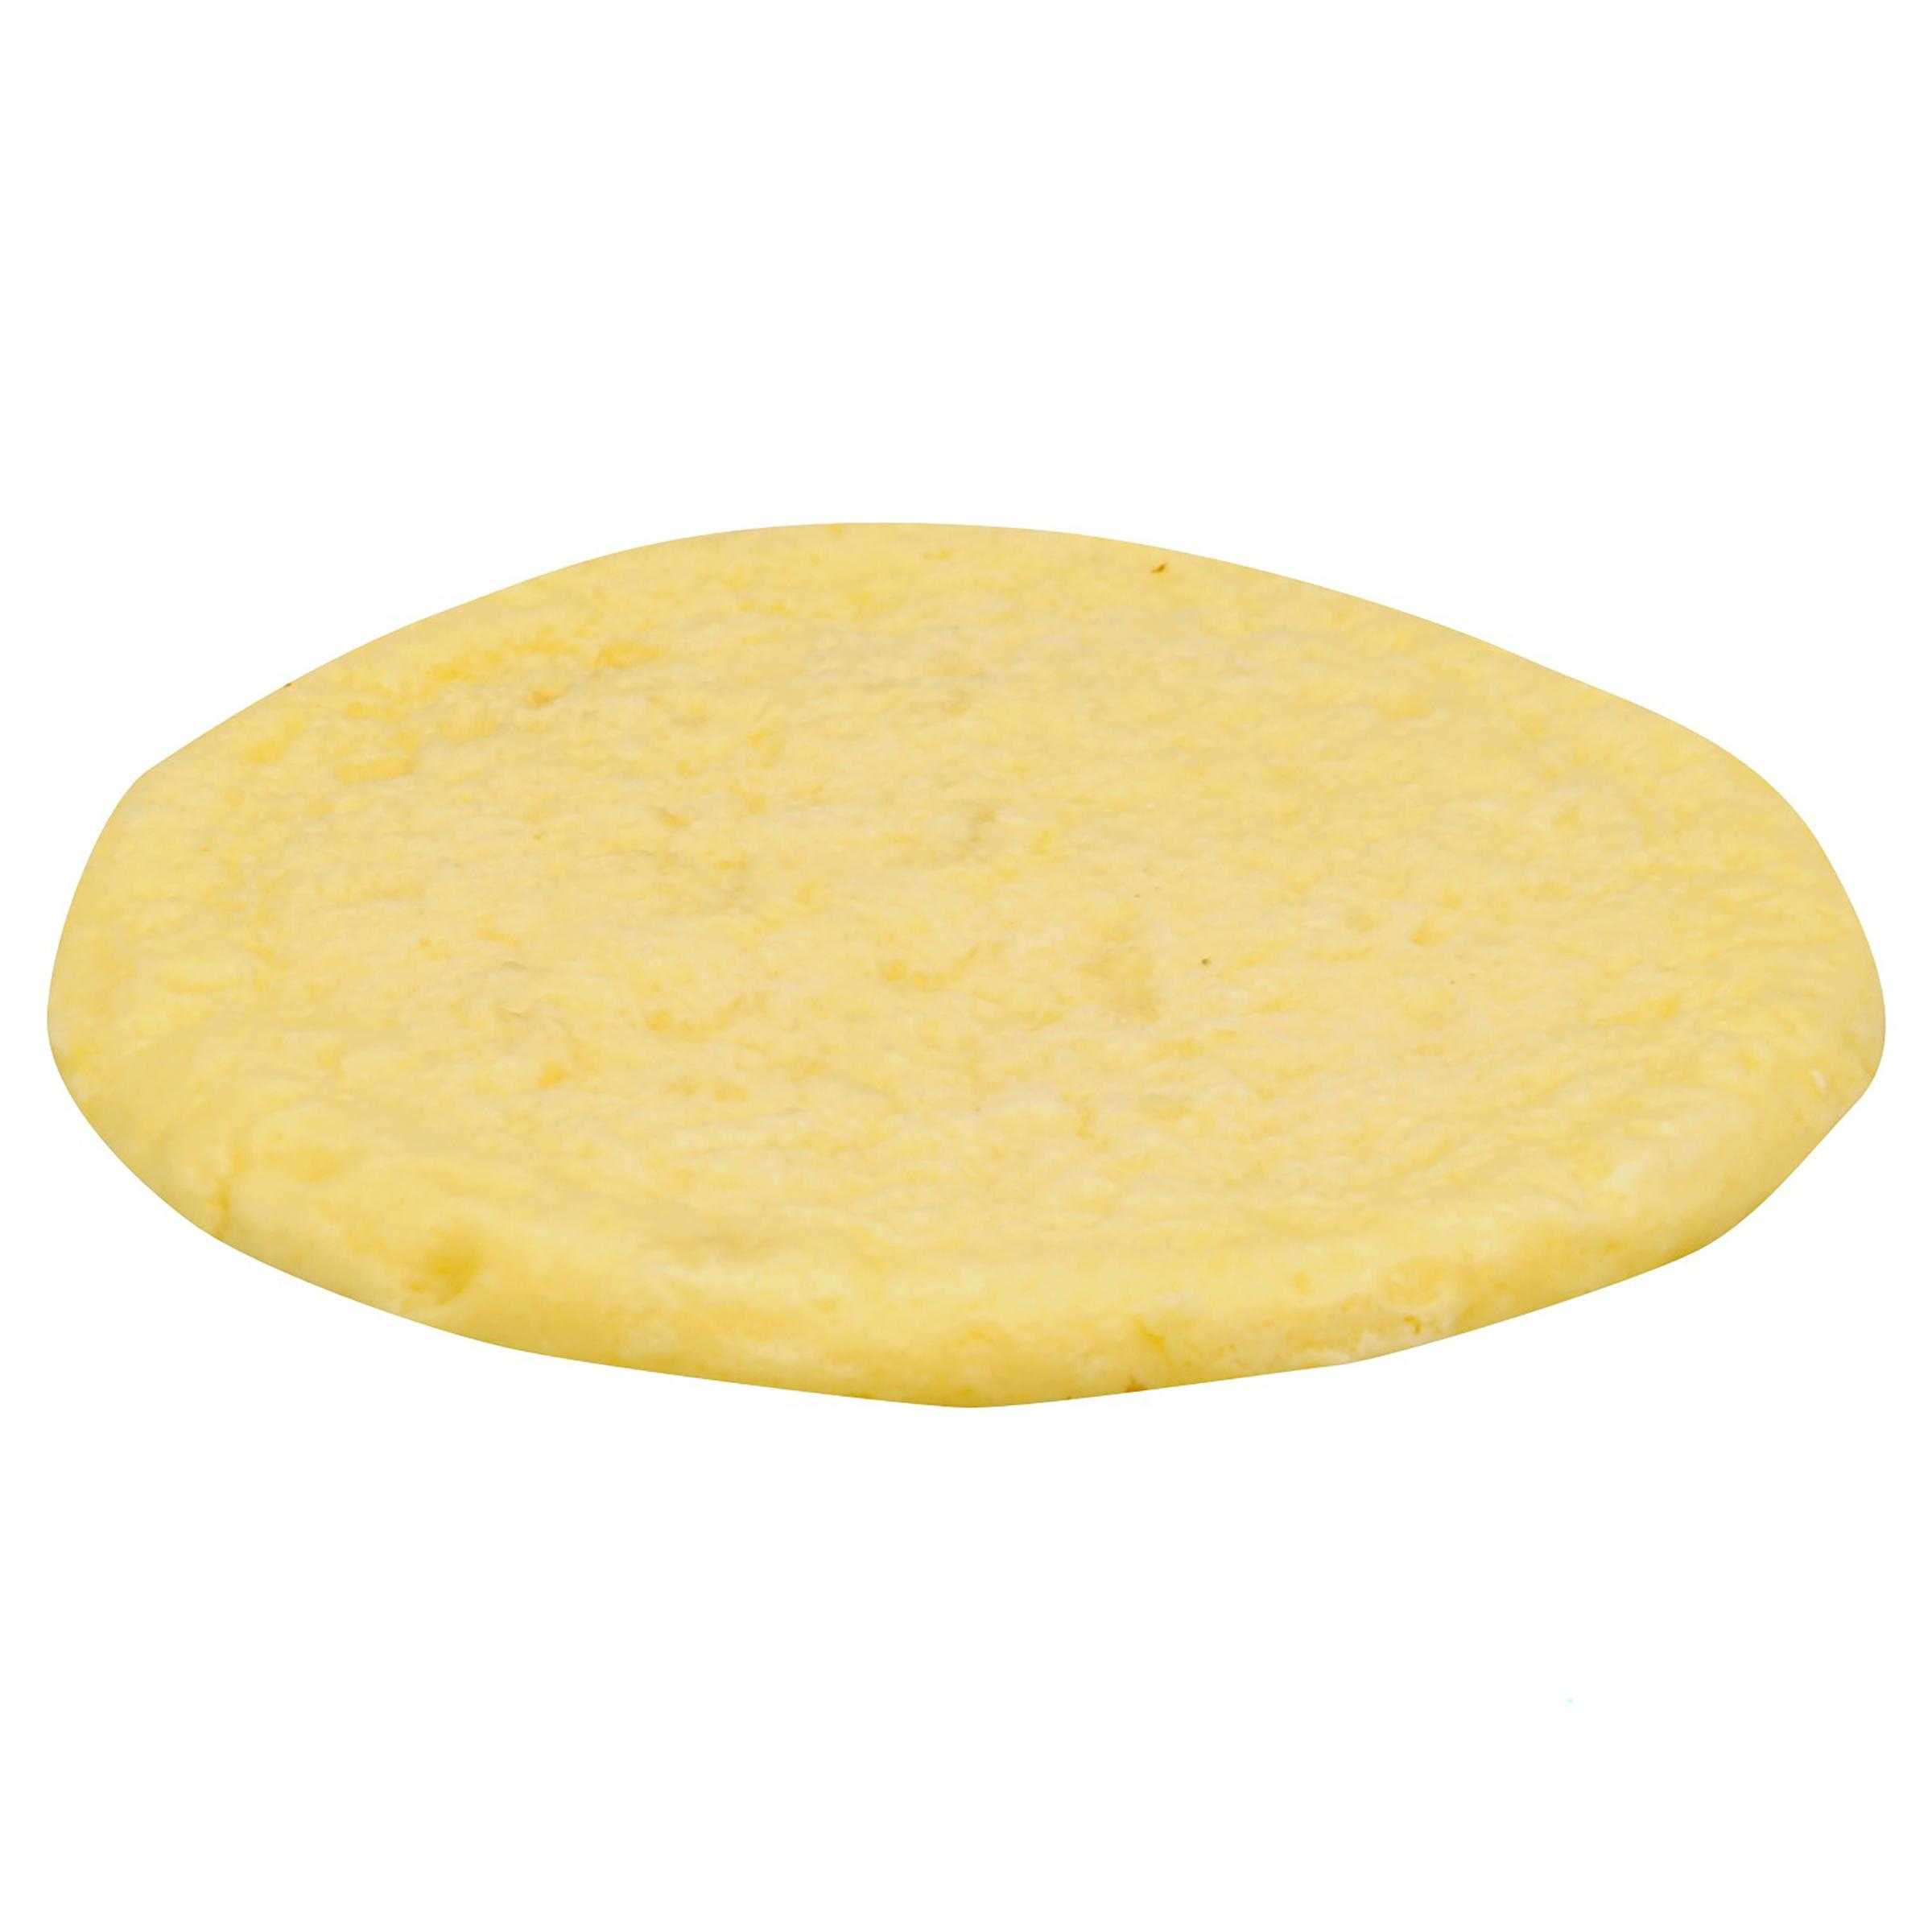 Michael Foods Papettis Plain Round Scrambled Egg Patty, 1.5 Ounce 120 per  Case. 